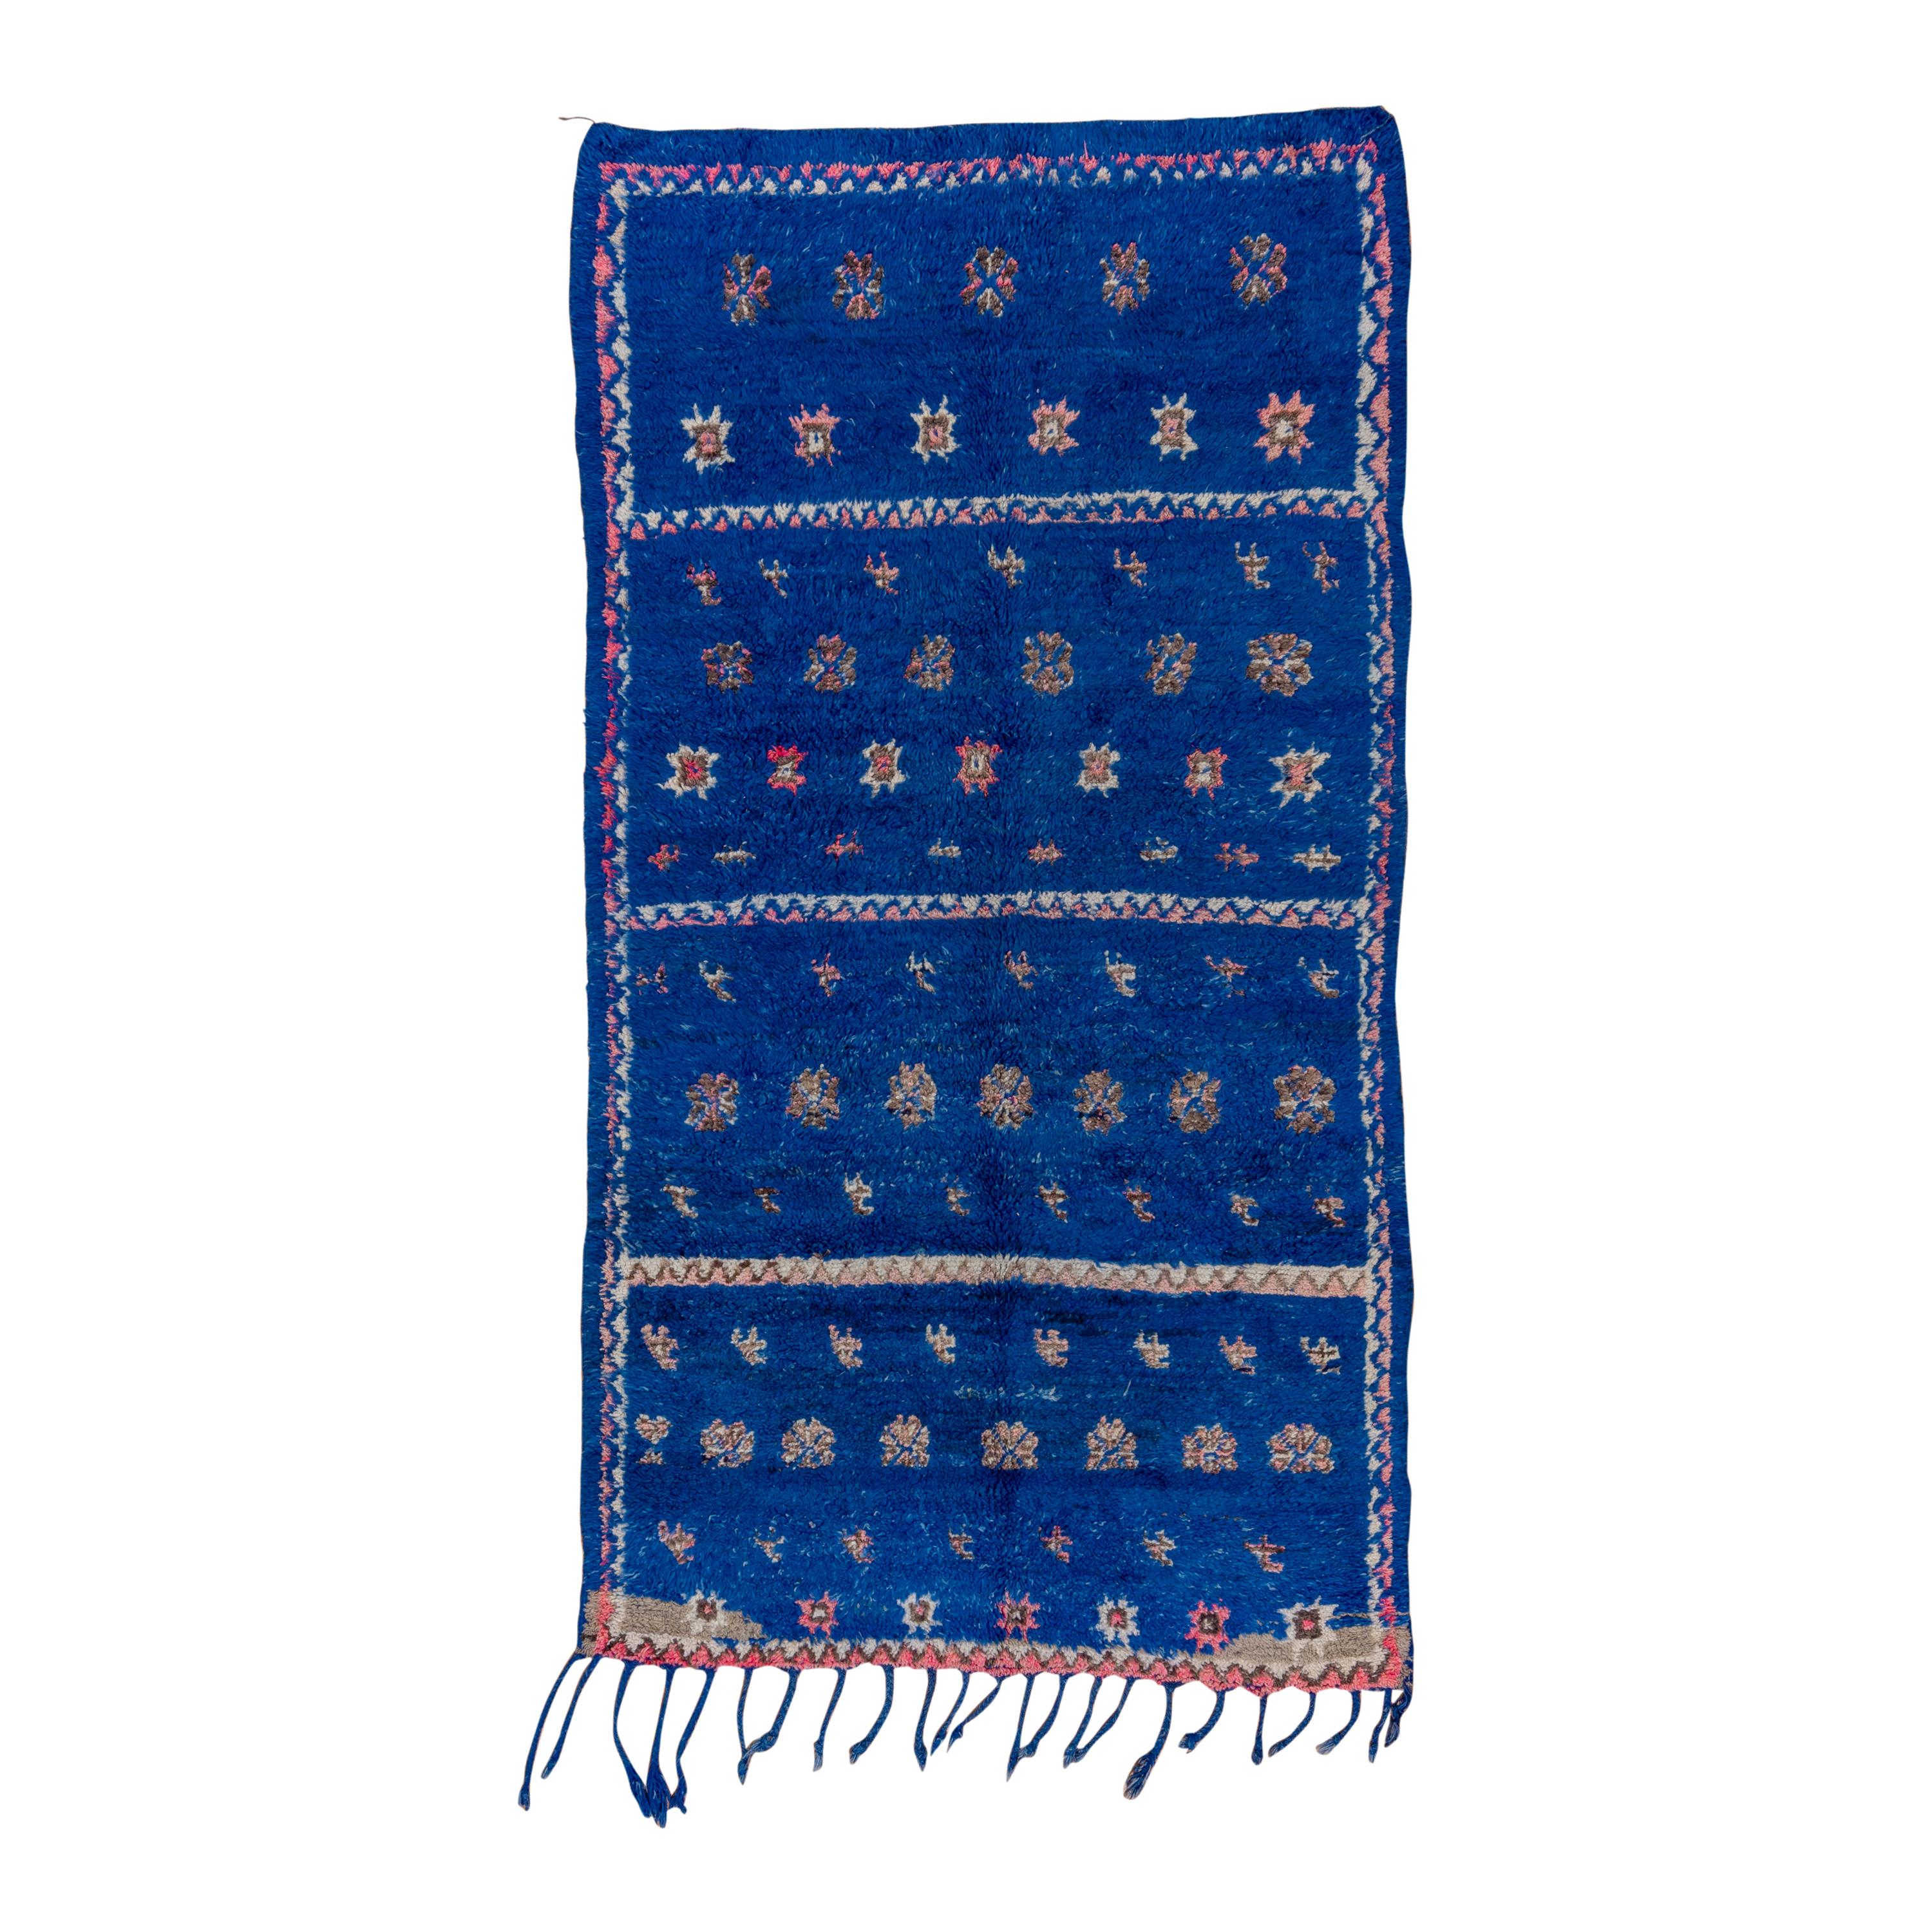 Blue Vintage Moroccan Carpet For Sale